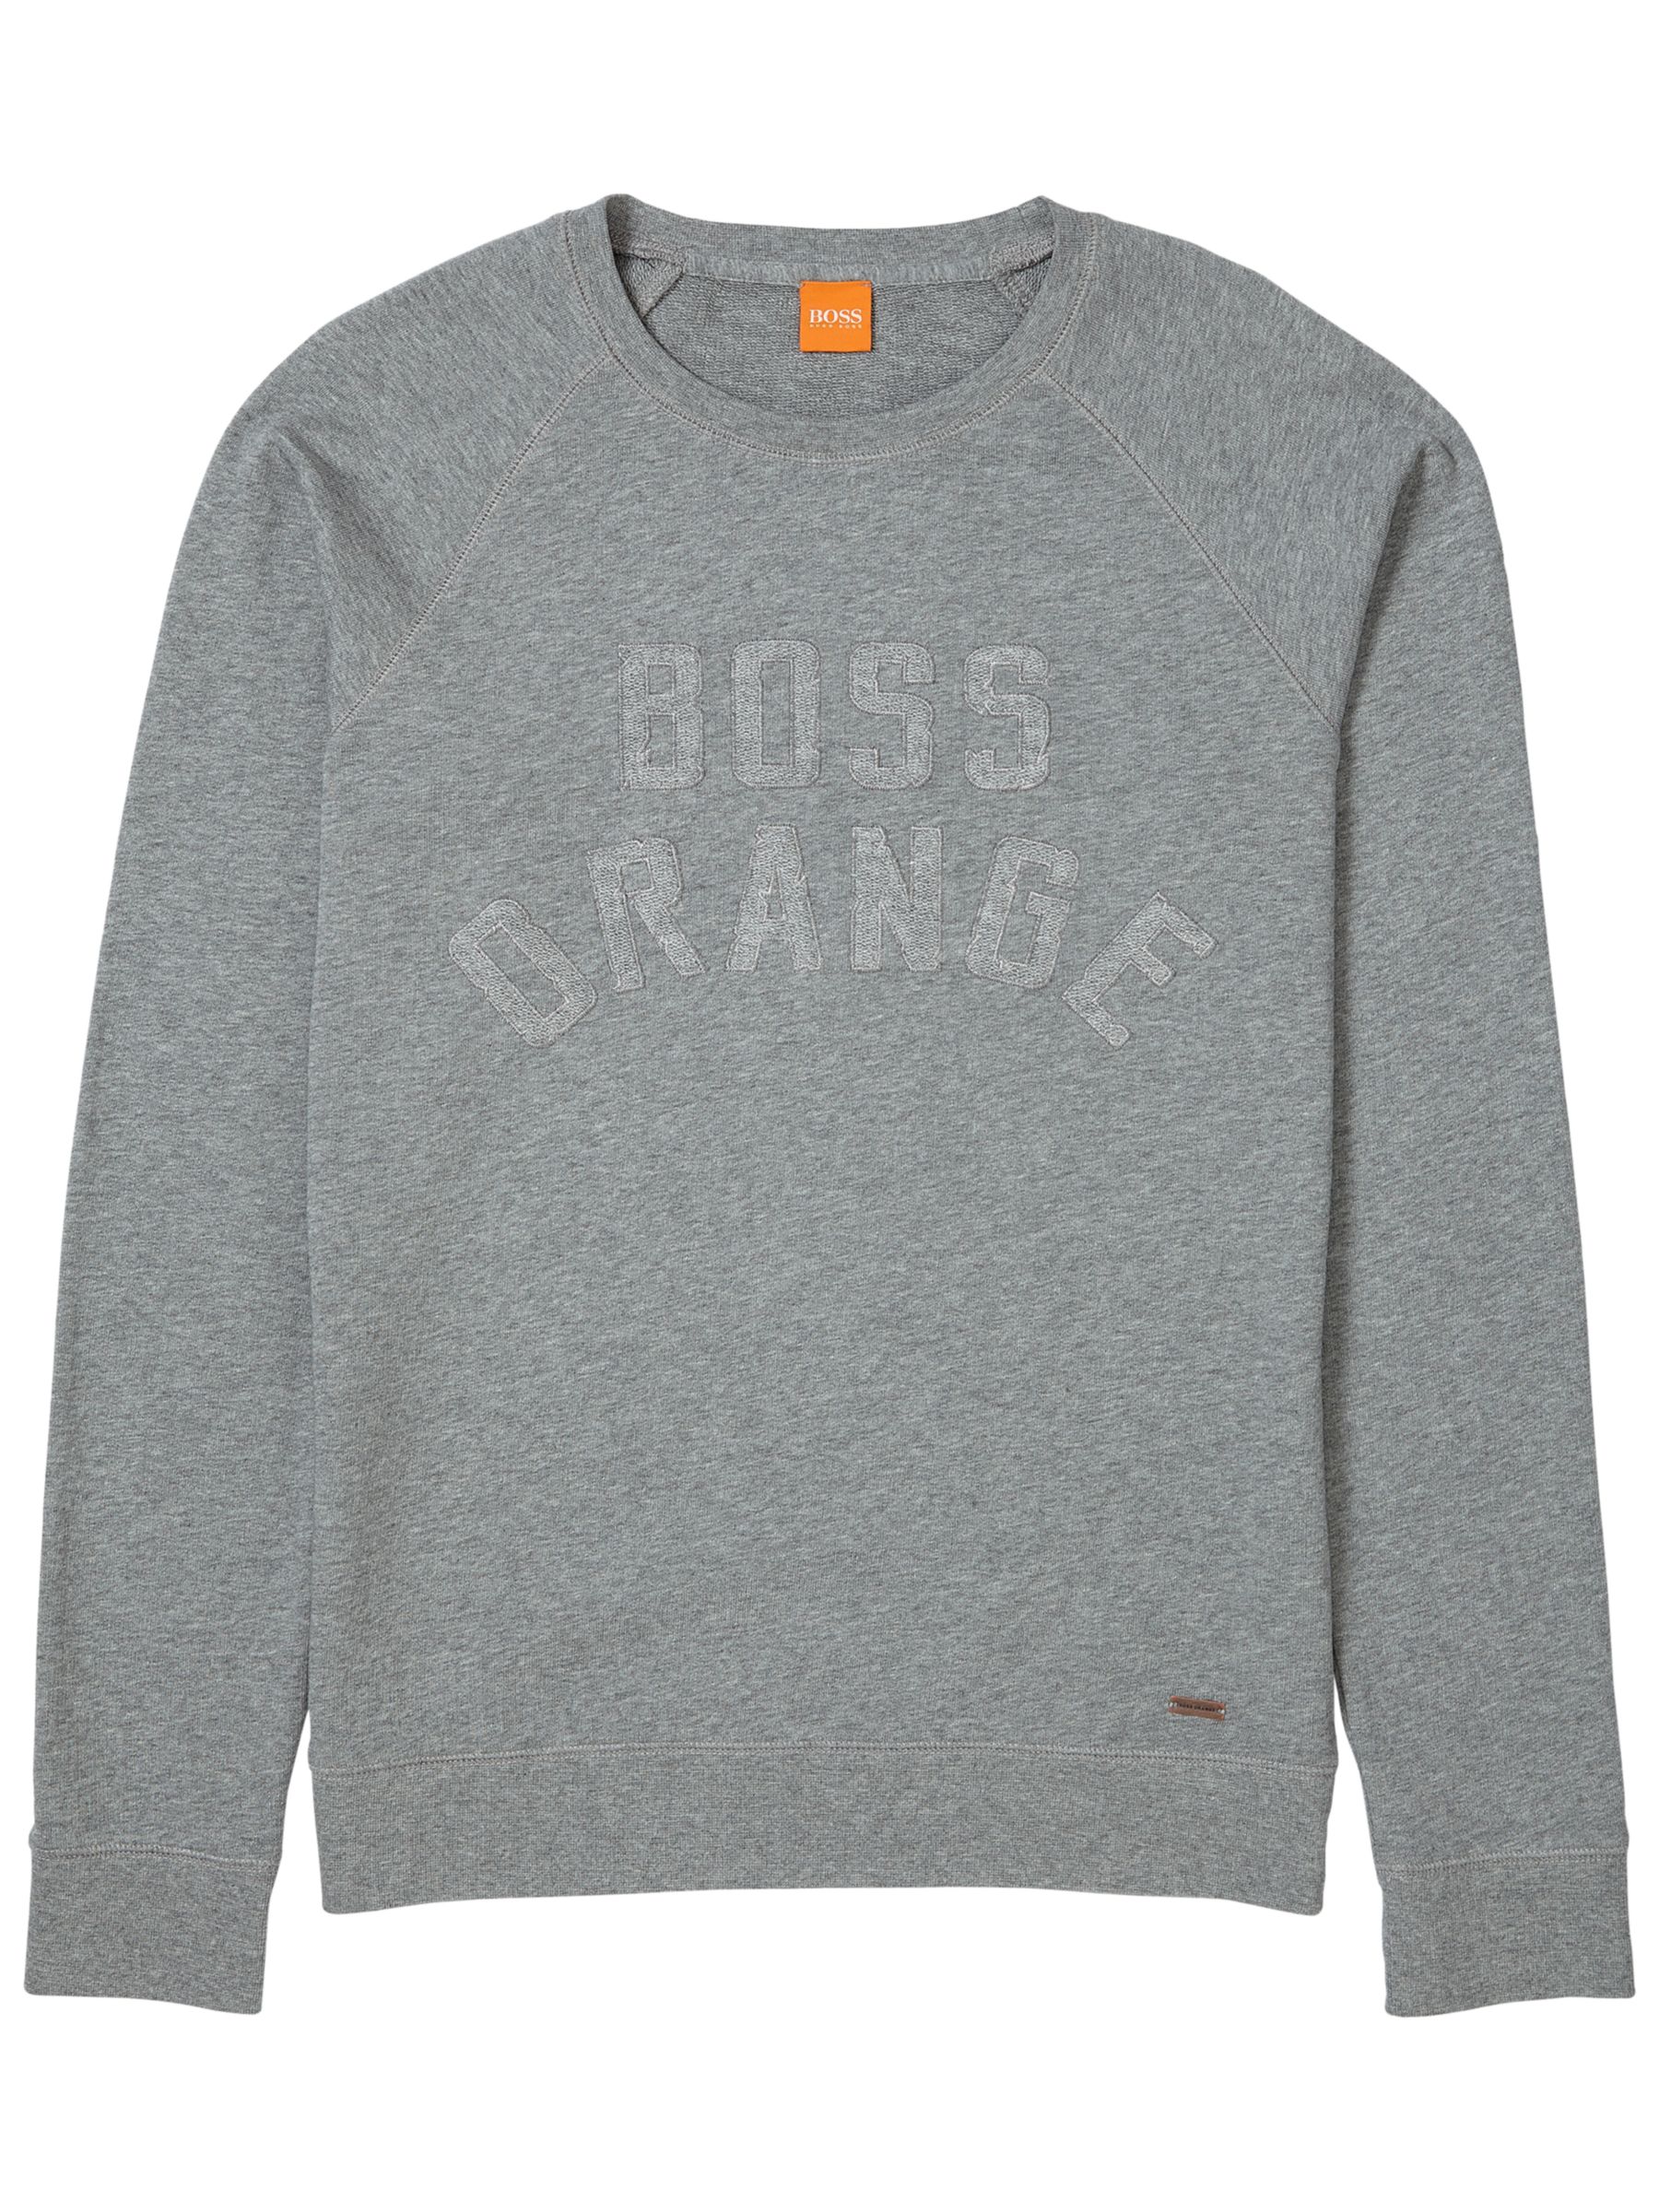 hugo boss orange sweater